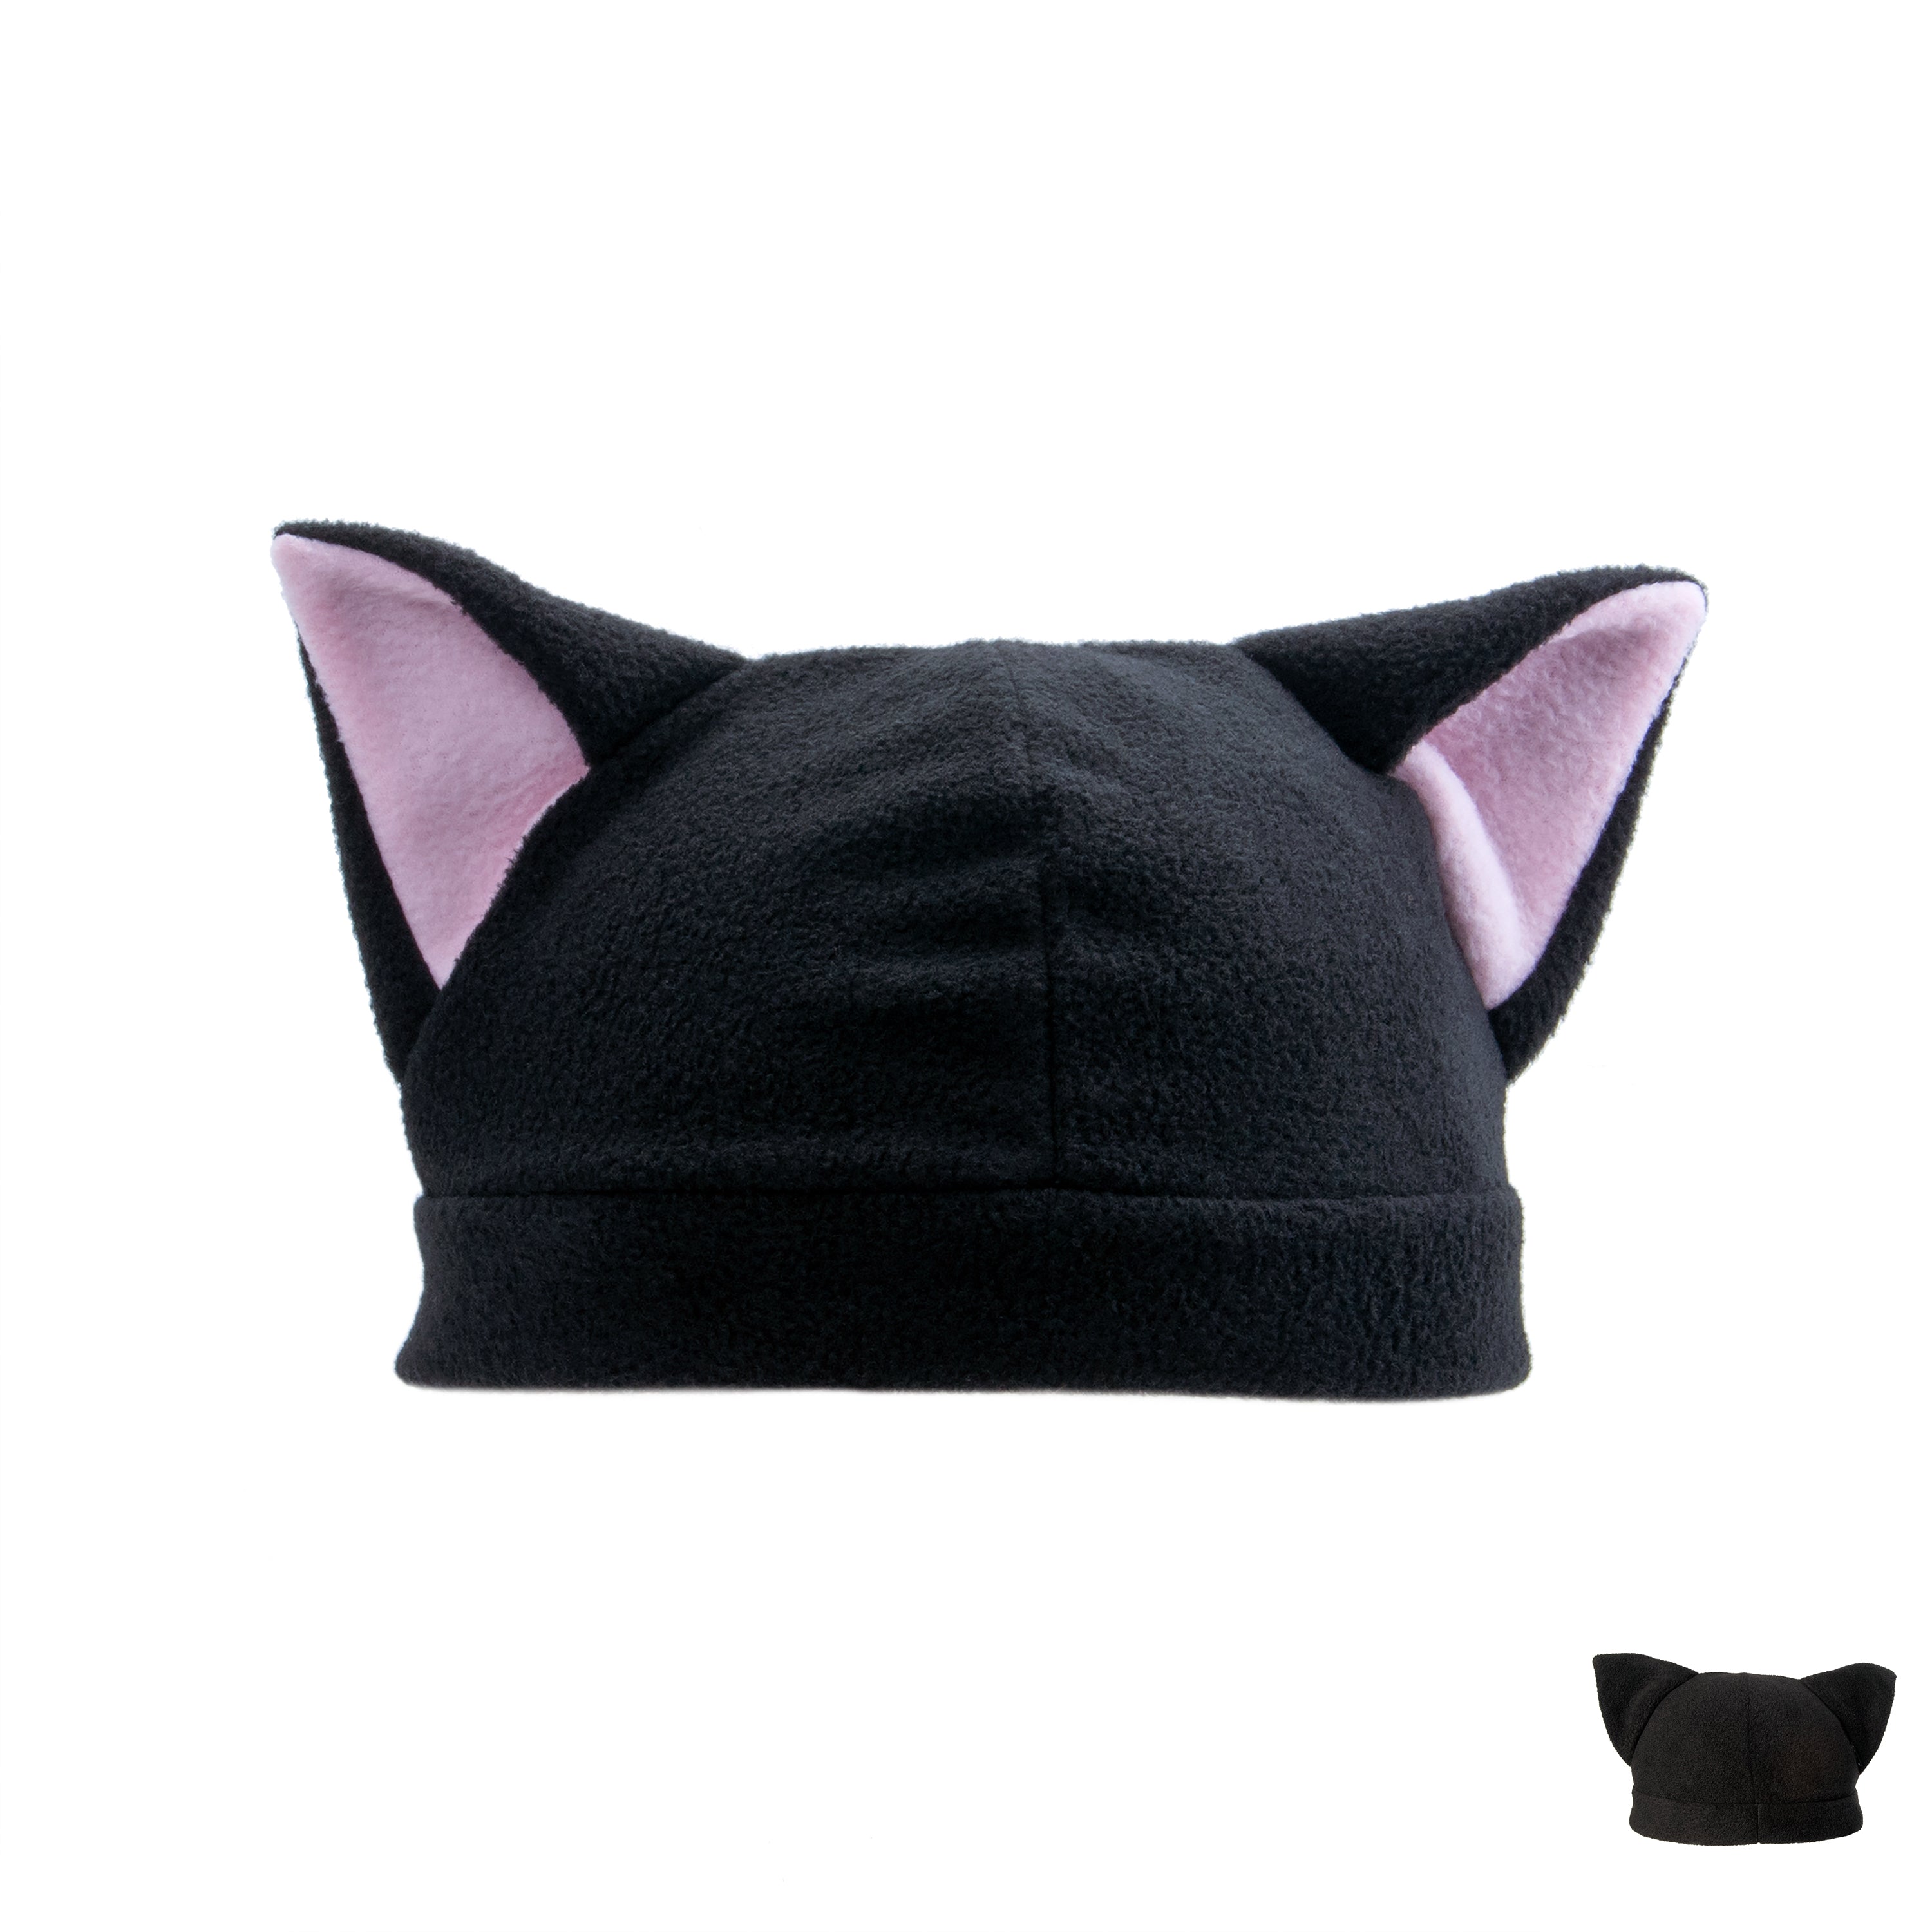 Fleece Kitty Hat - Pawstar Pawstar Fleece Hats cat, cosplay, costume, Feline, furry, hat, ship-15, ship-15day